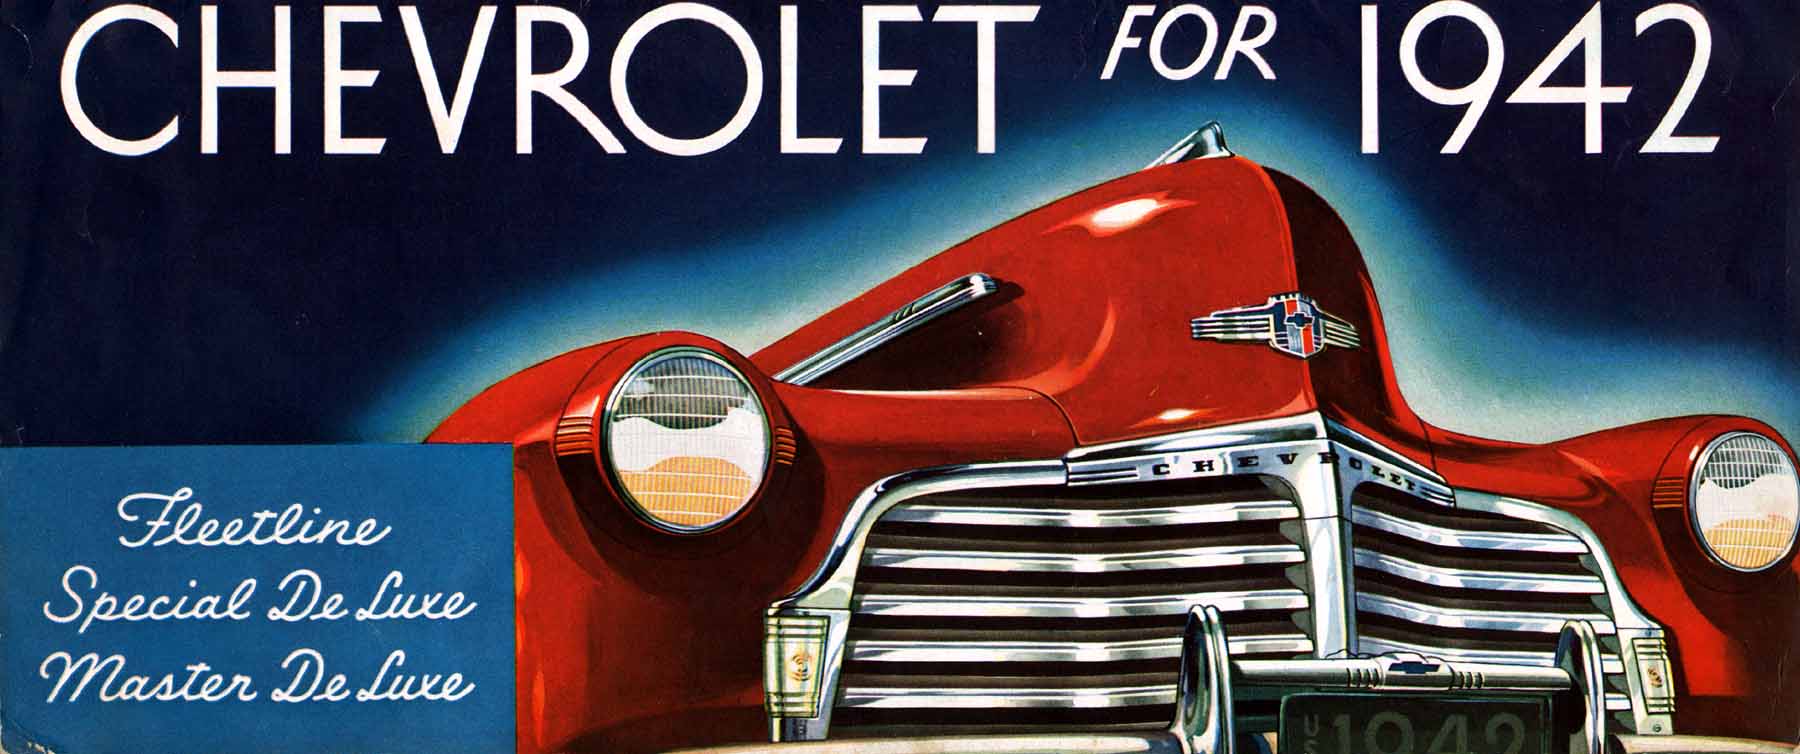 1942_Chevrolet-01